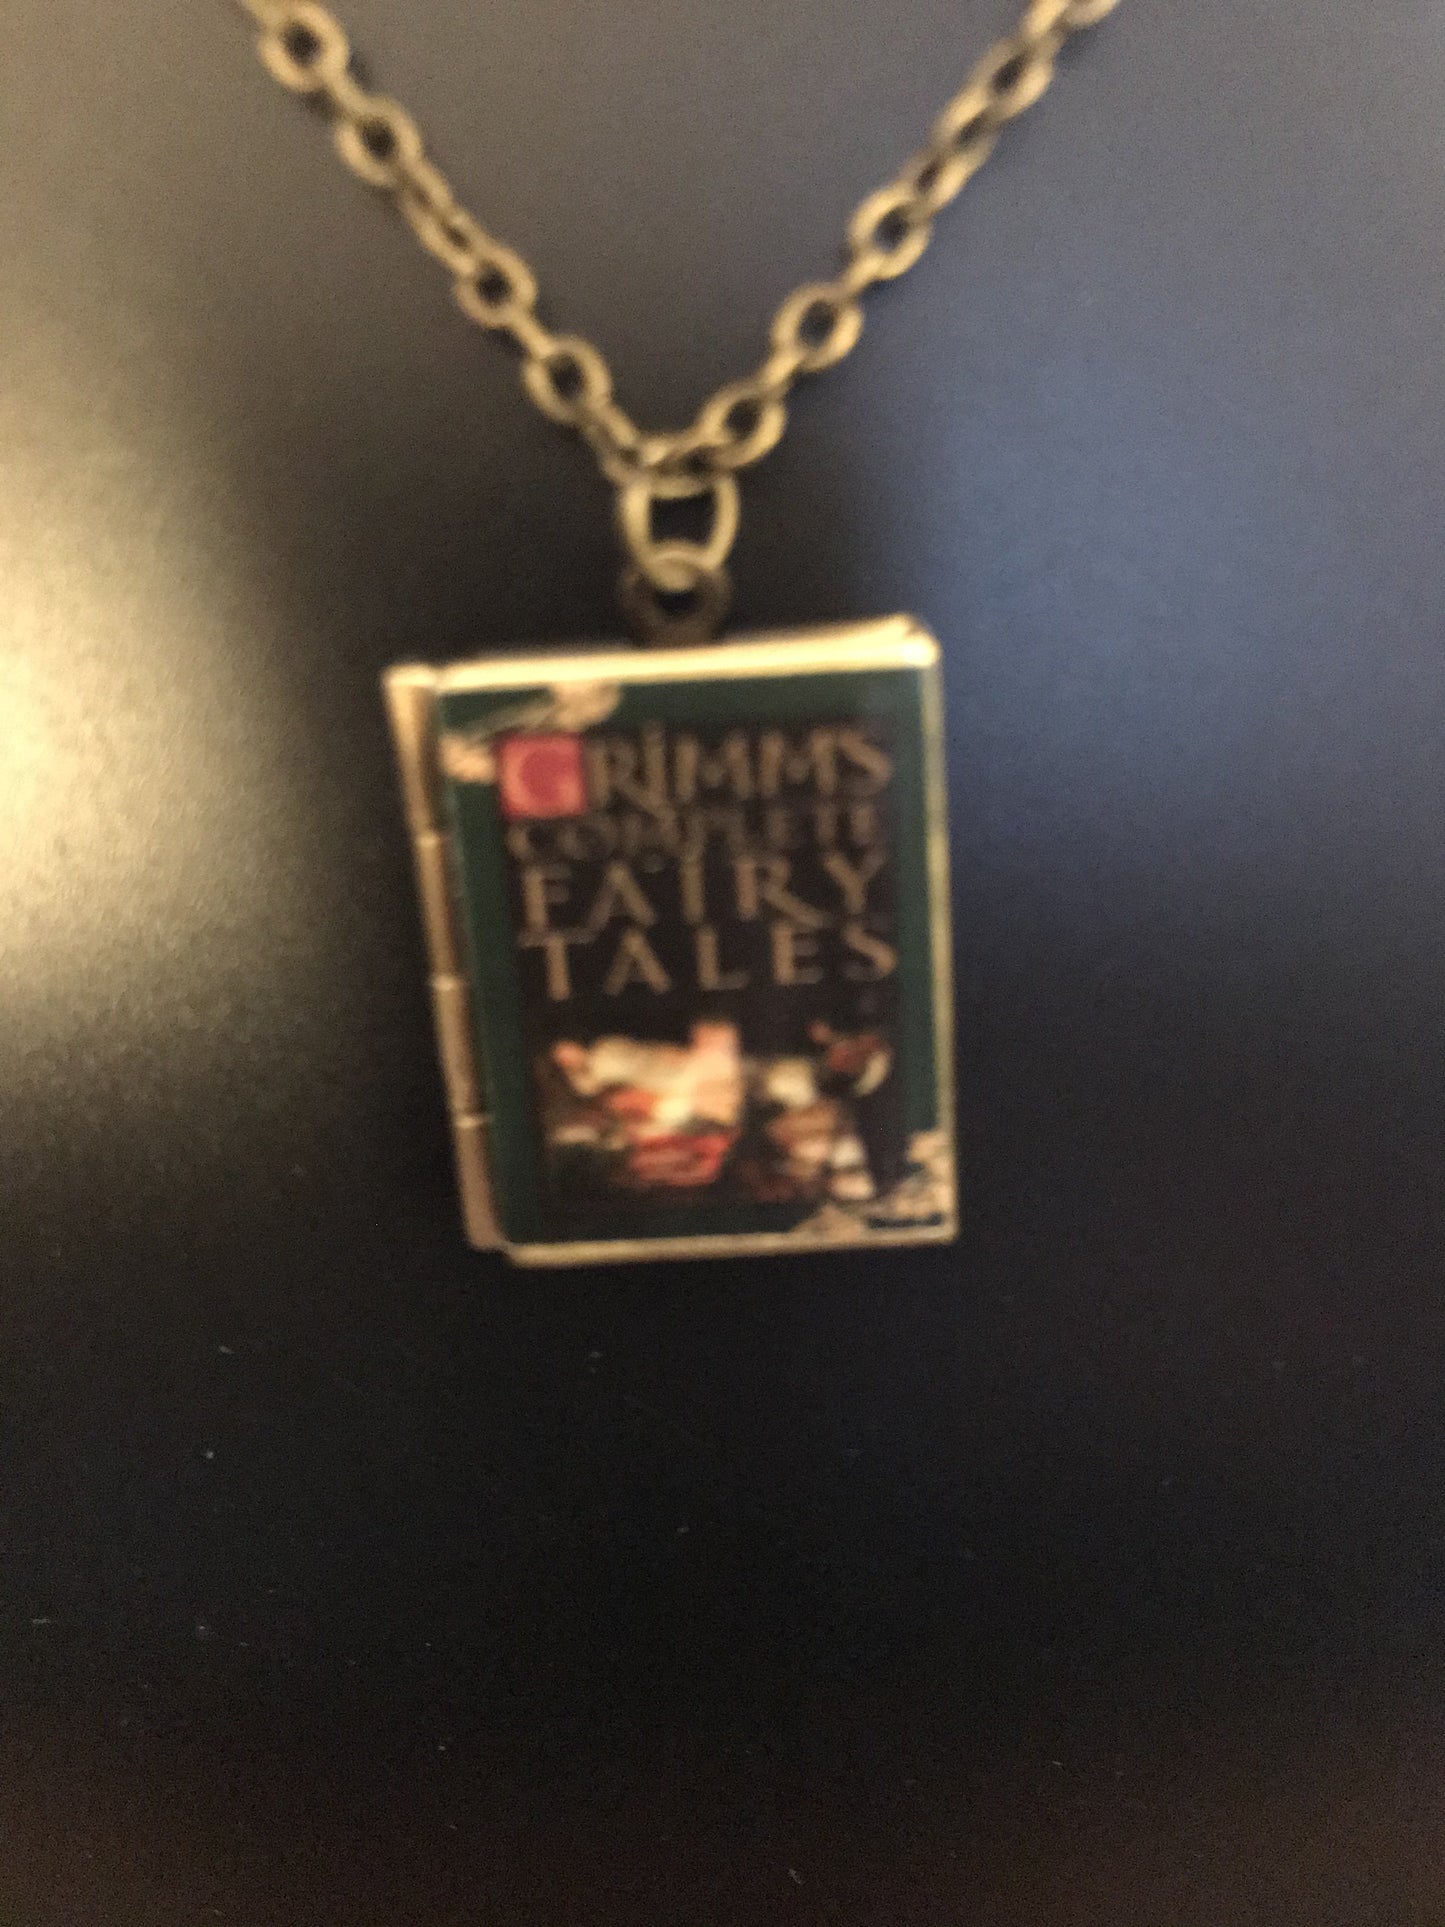 Book Locket "Grimm's Fairy Tales" Necklace Bronze